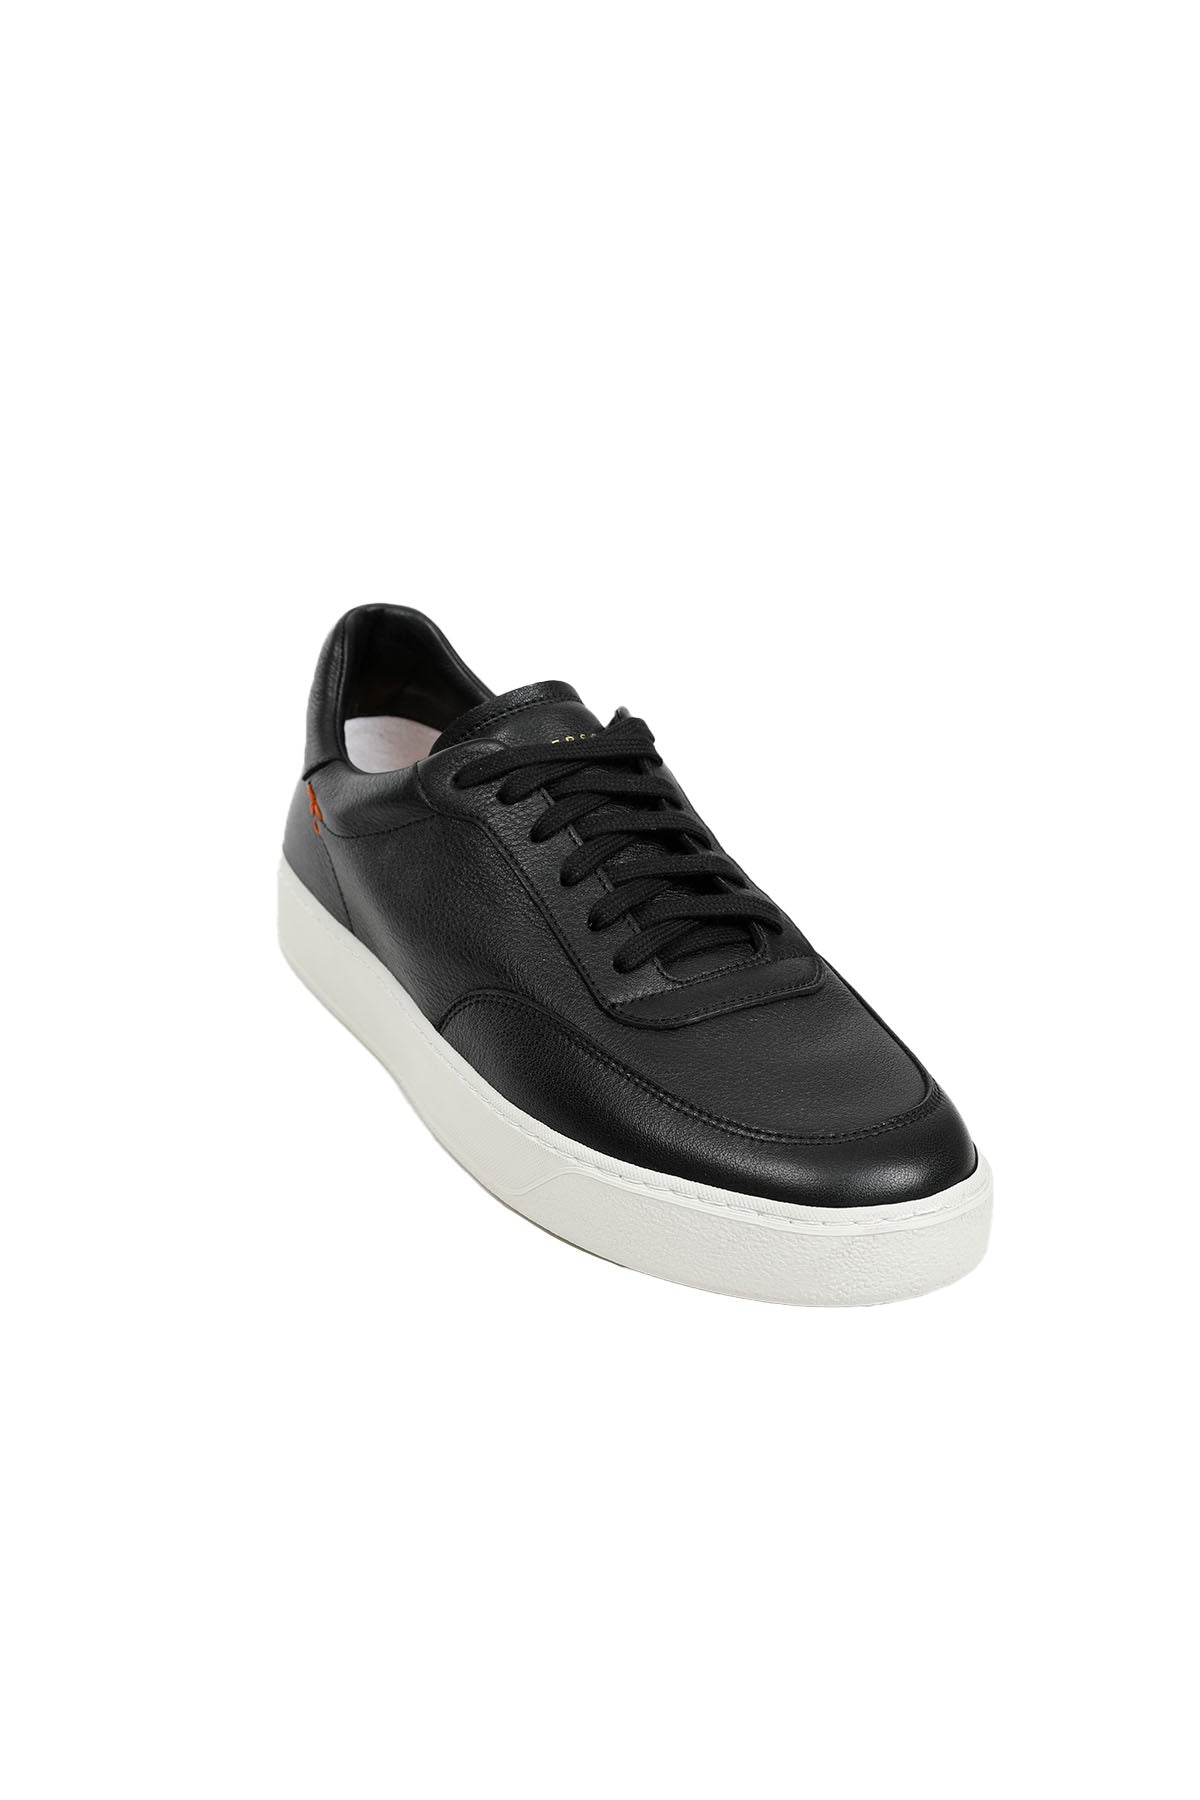 Henderson Vibram Taban Max Sneaker Ayakkabı-Libas Trendy Fashion Store